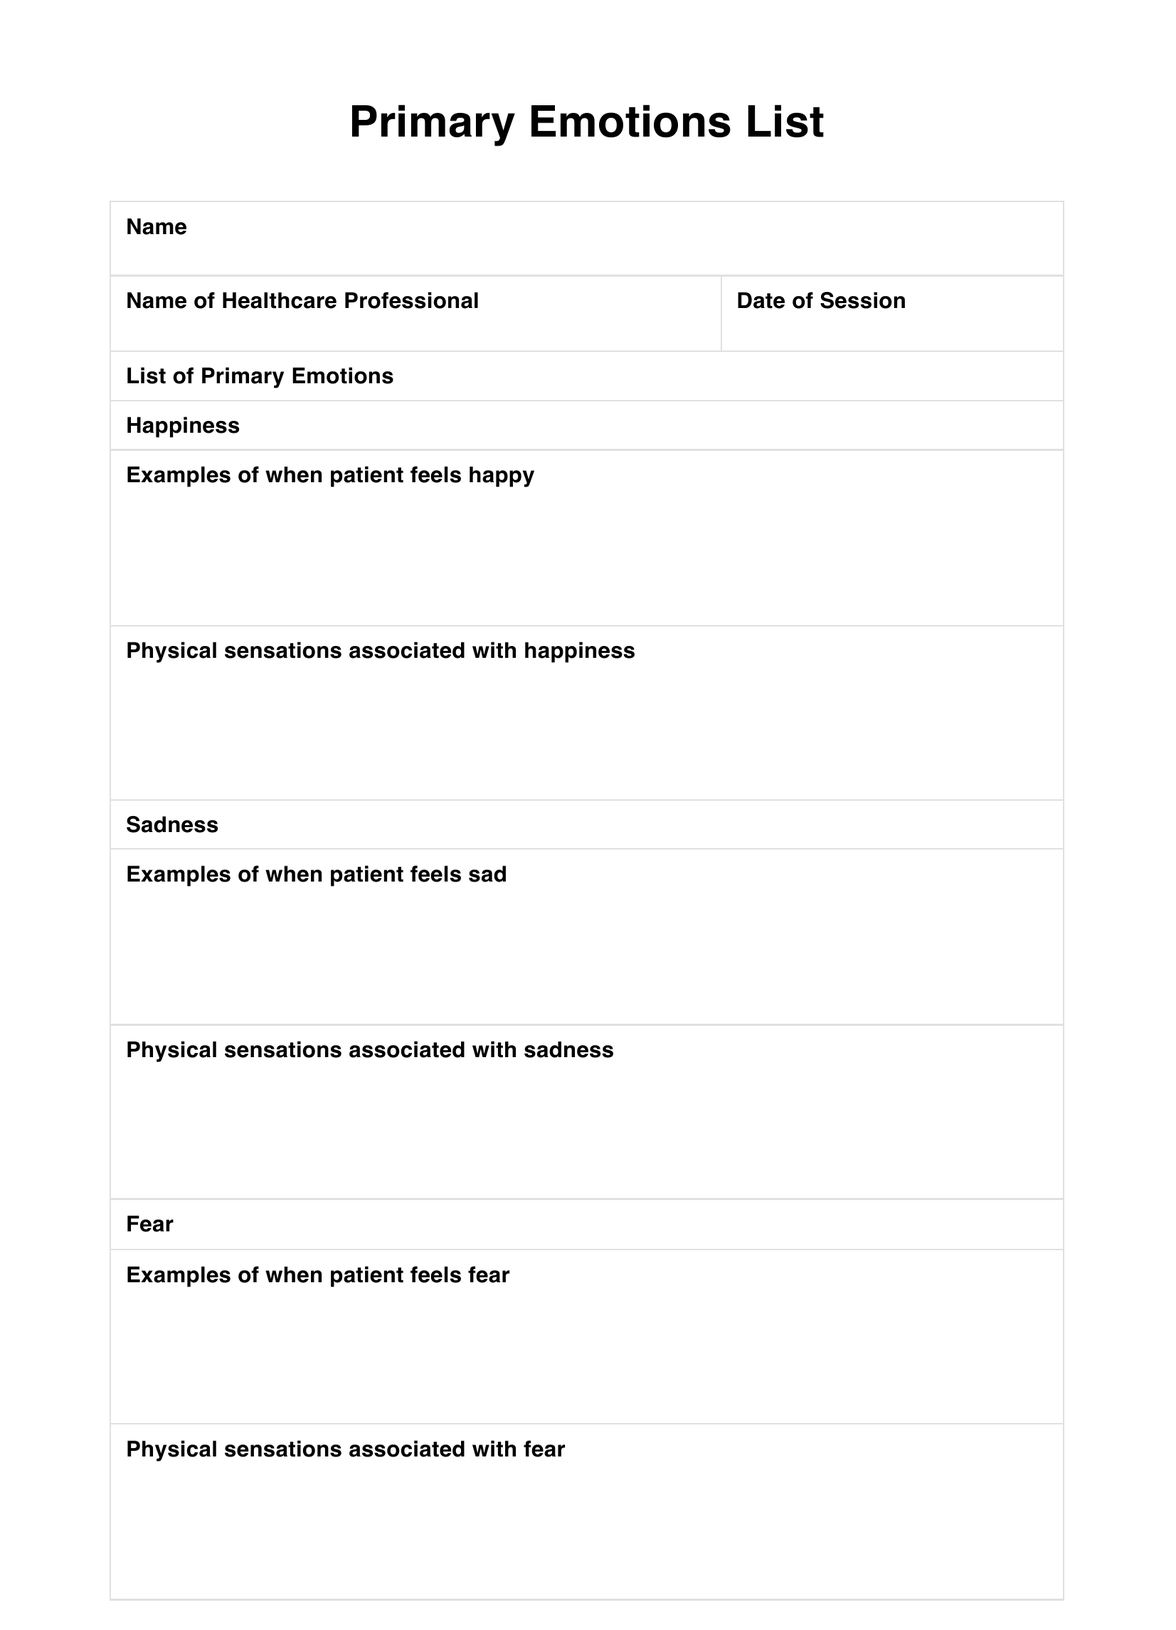 Primary Emotions list PDF Example